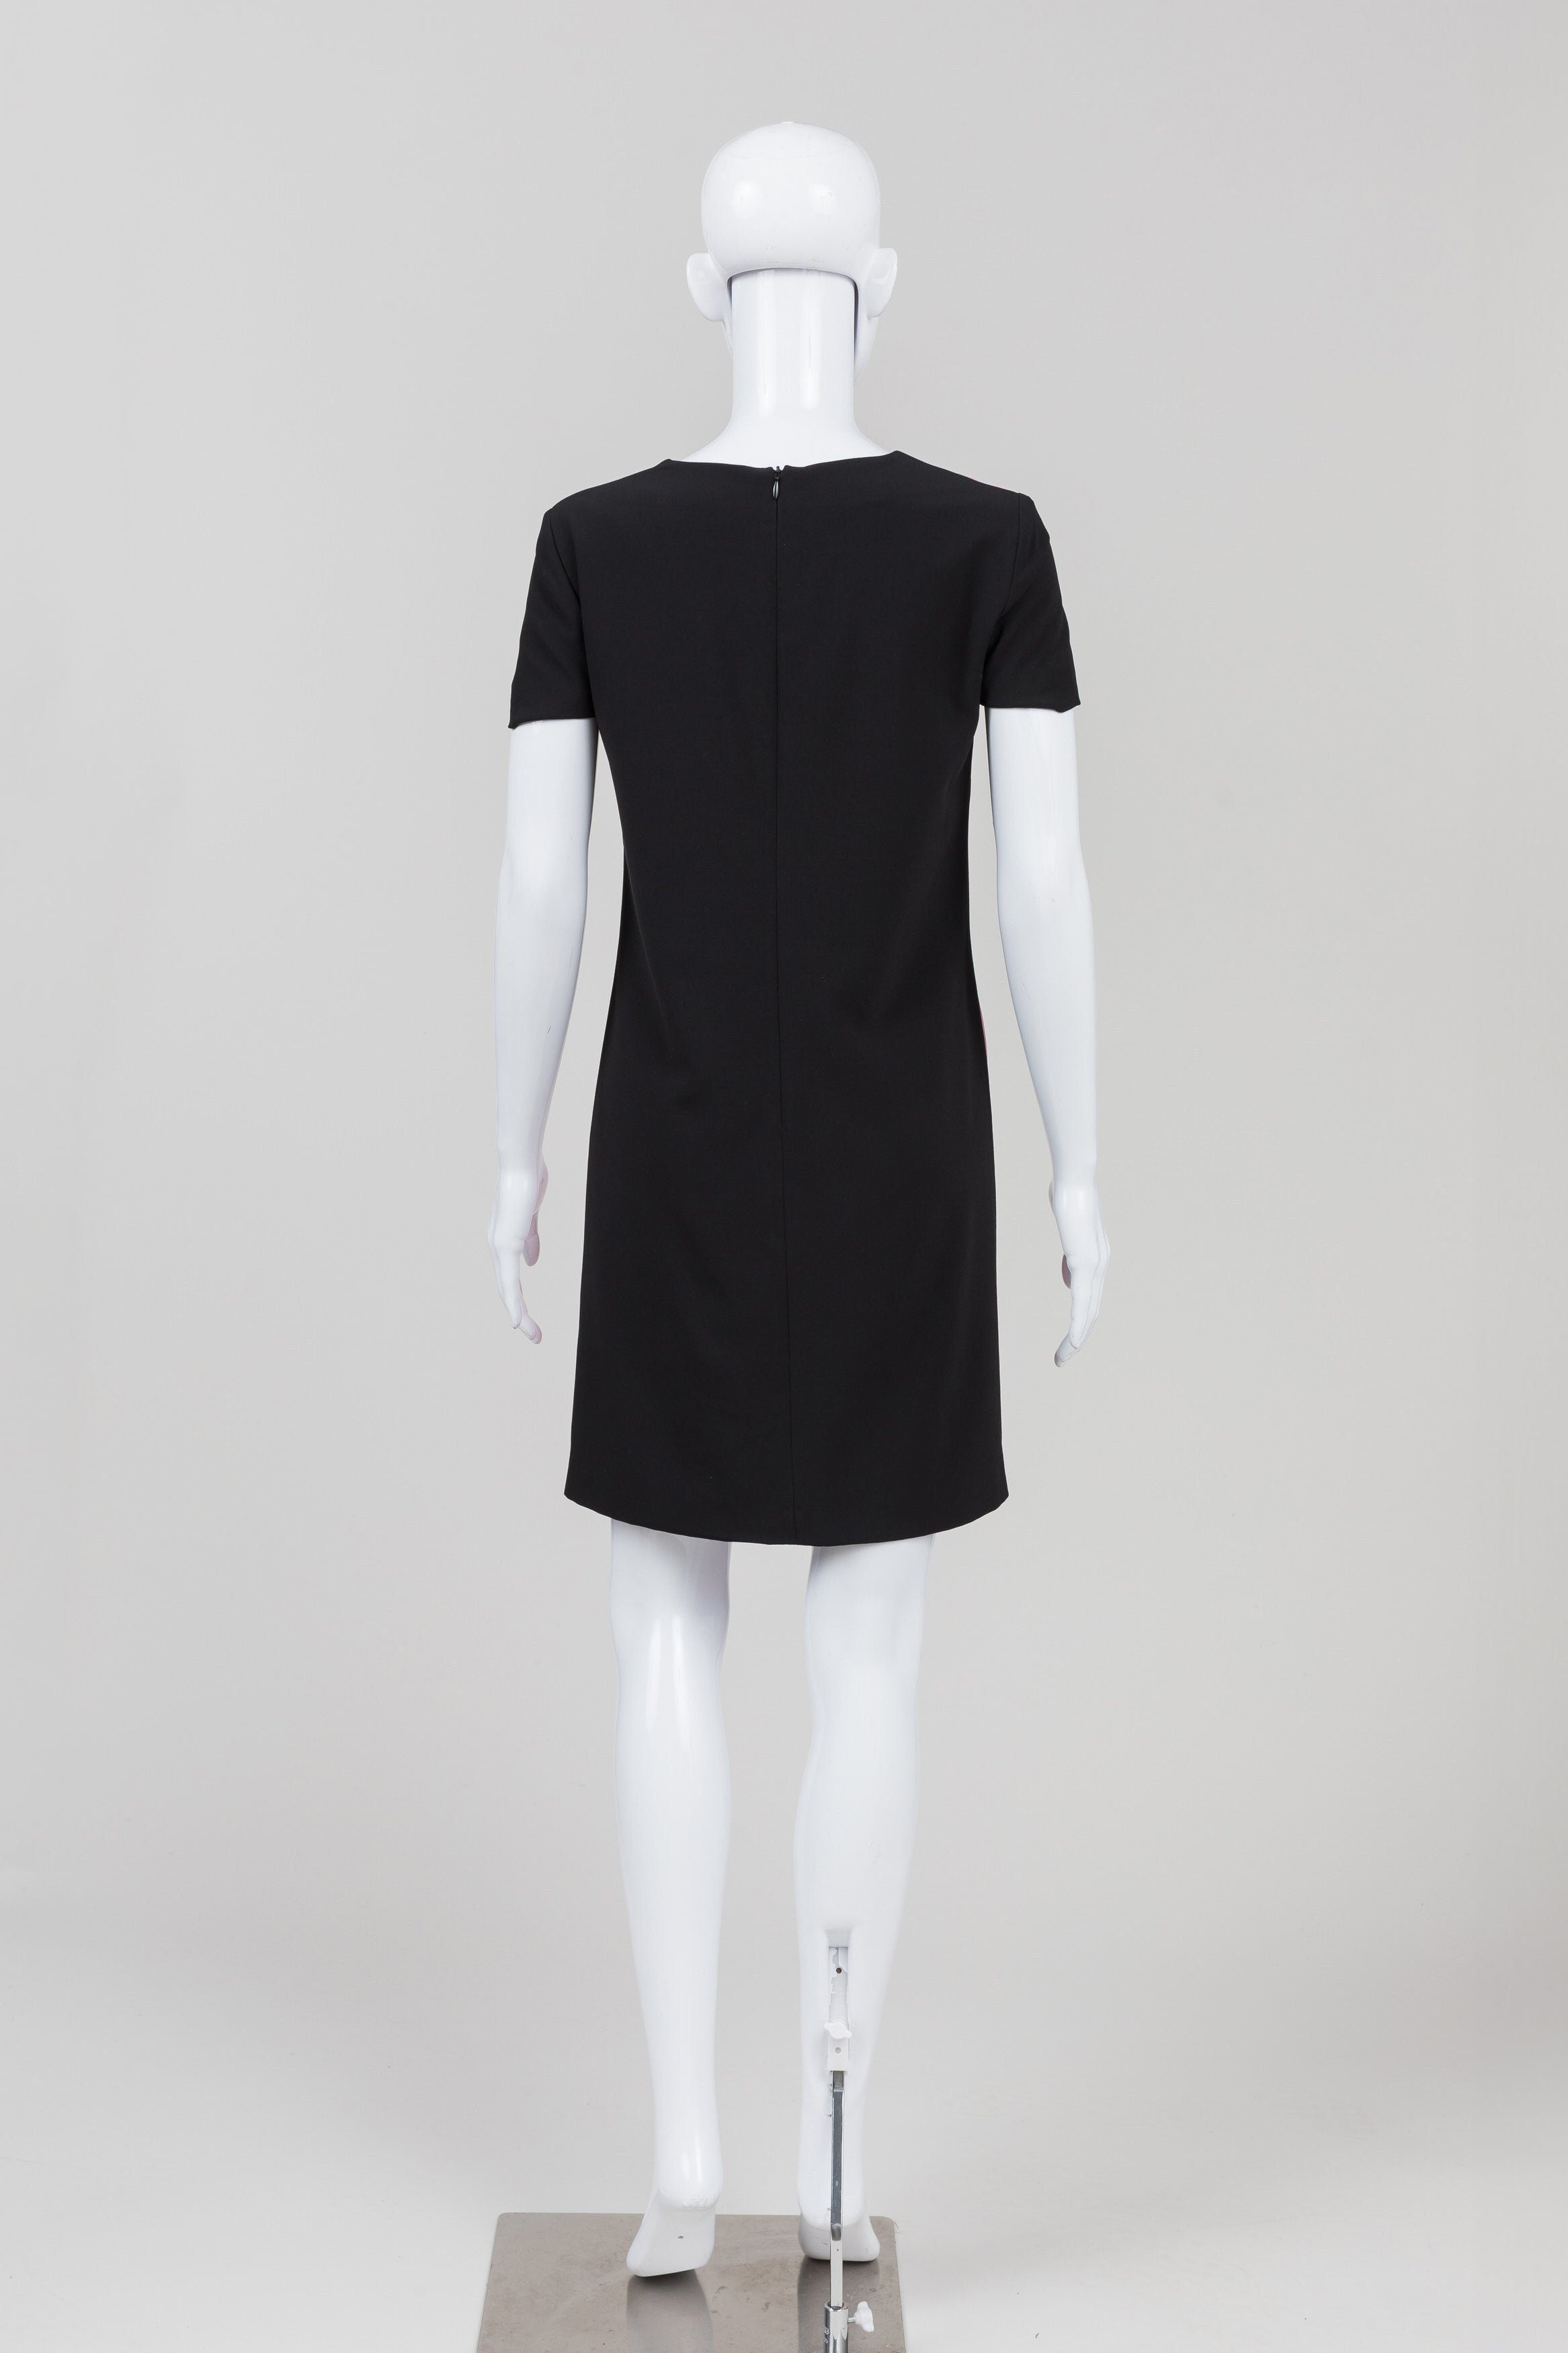 Moschino Pink/Black Print Short Sleeve Dress (6)